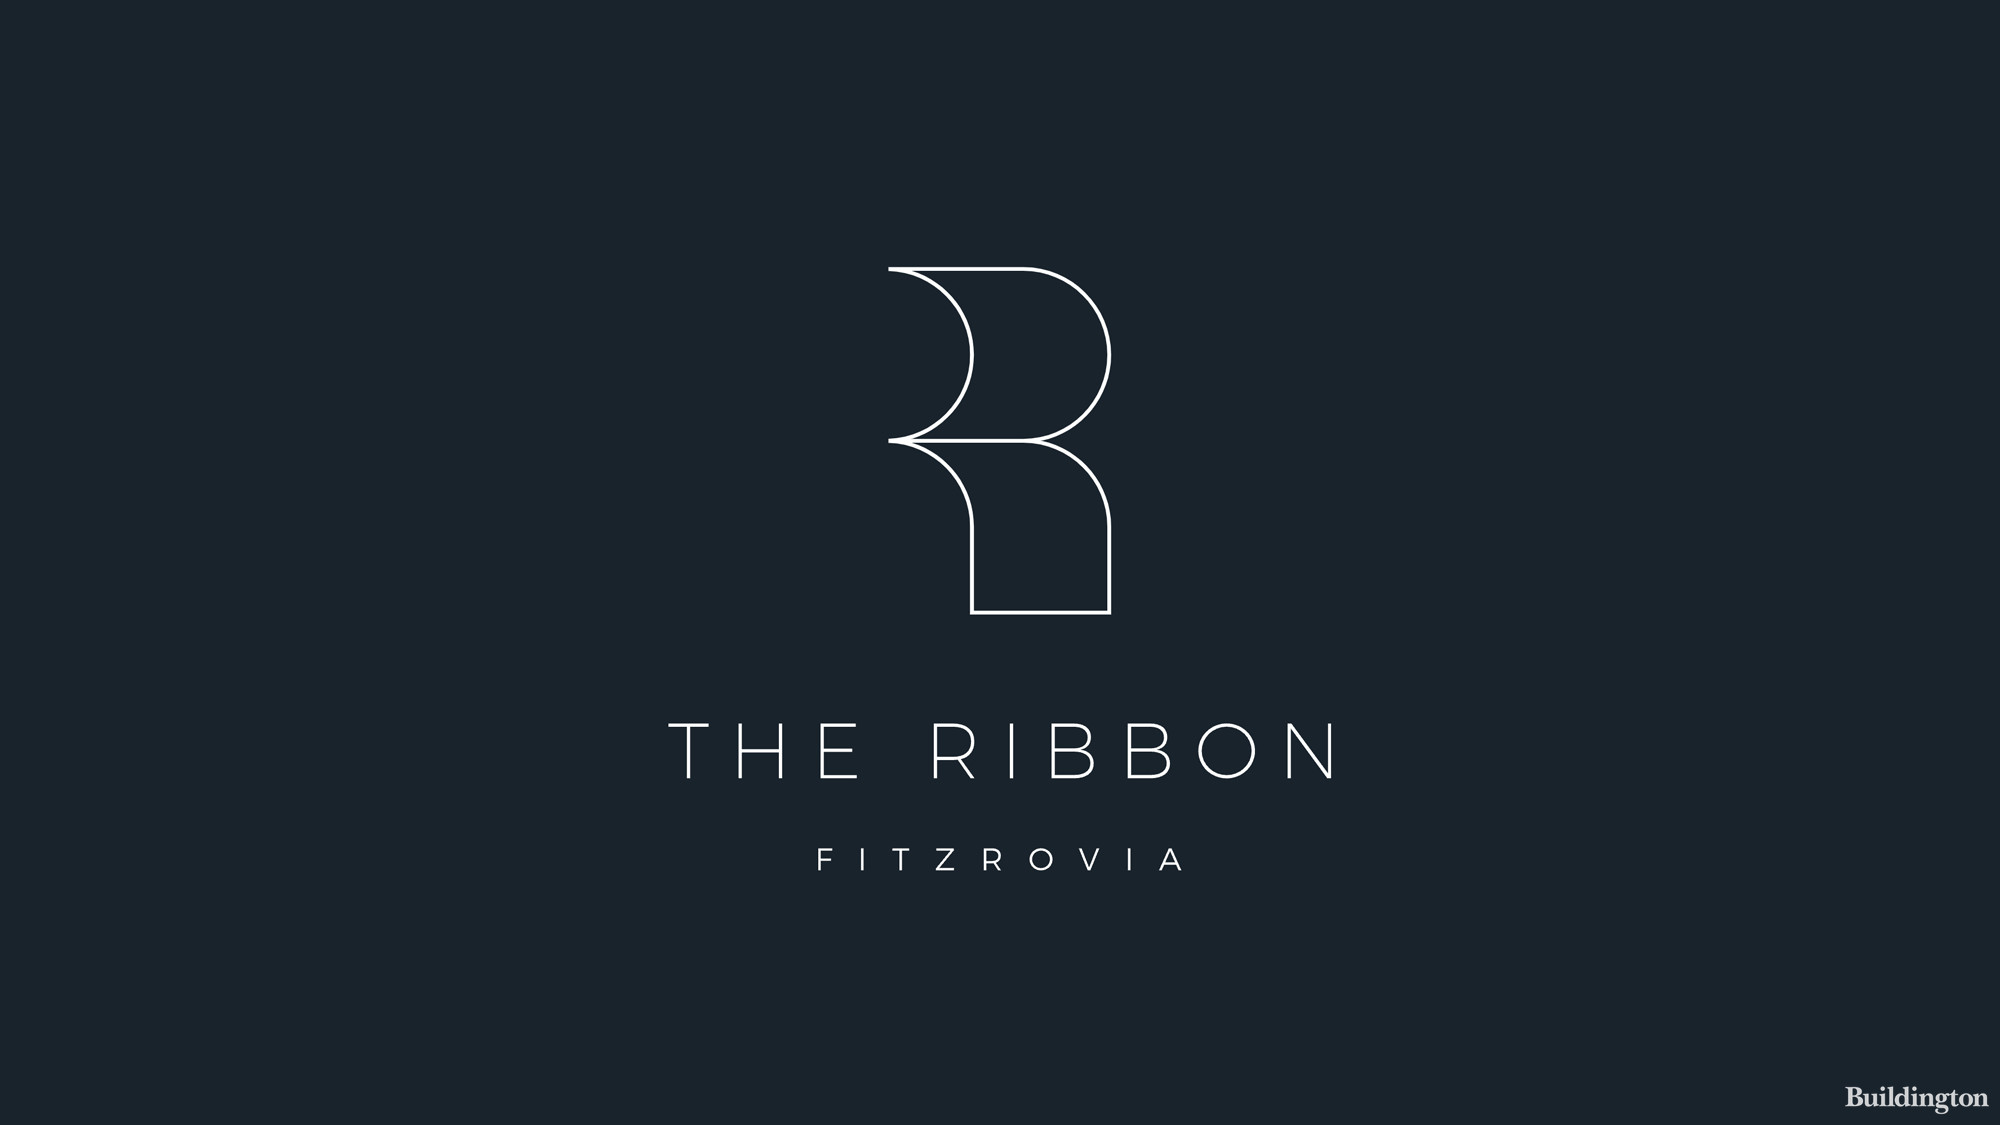 The Ribbon office development on Oxford Street logo cover